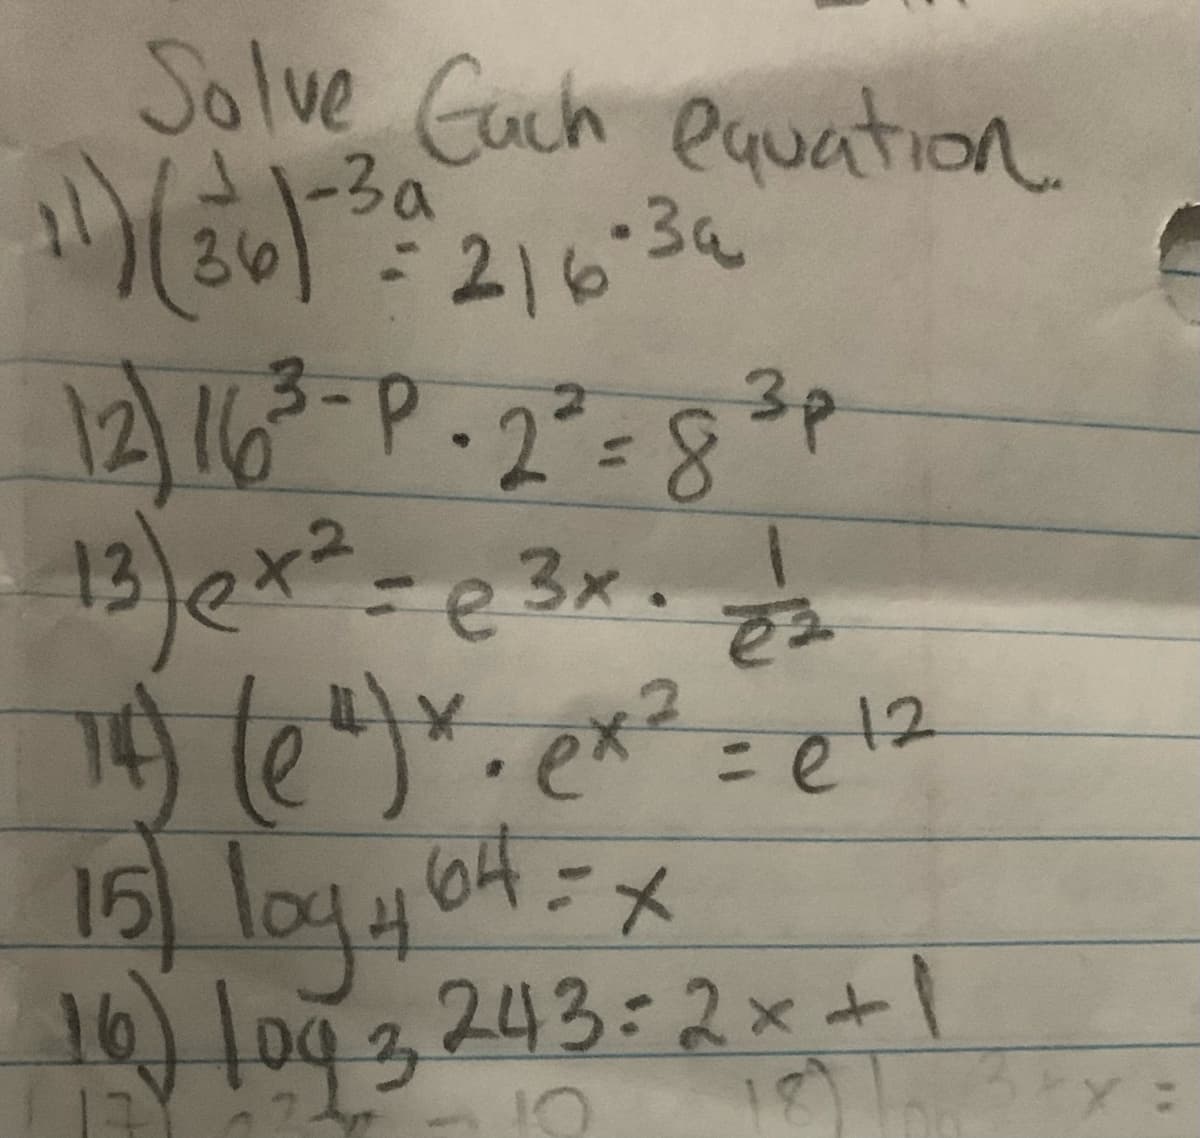 Solve Guch equation
-3a
-2)6.34
3p
13)ex²-e3x
le
%23
16 logy 04=x
logy 64=x
16) og 2, 243:2x+1
18
7.
